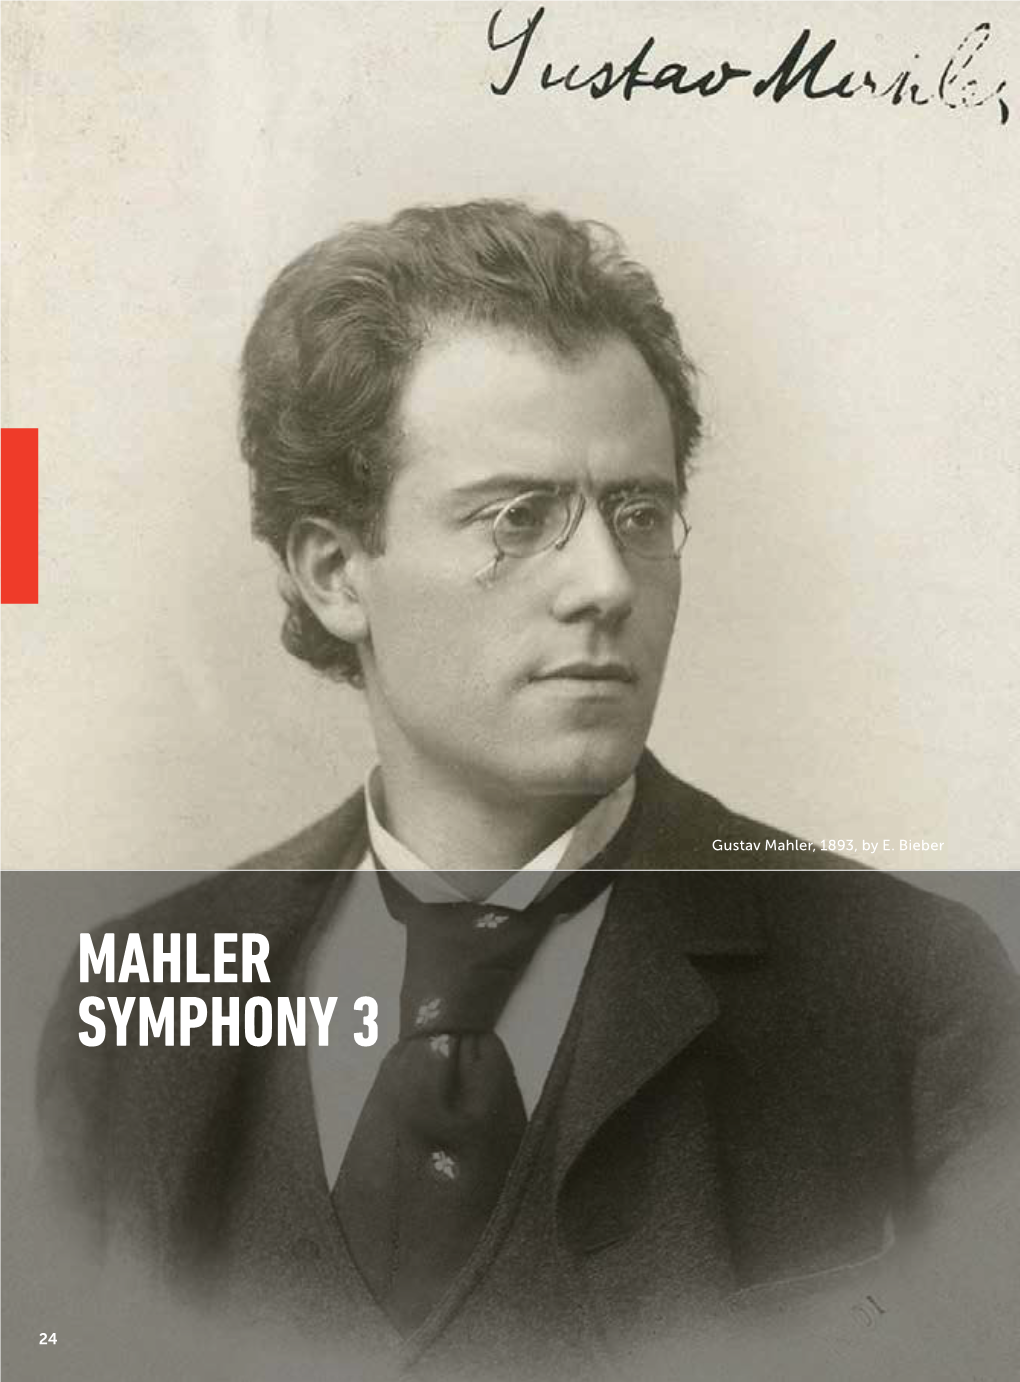 Mahler Symphony 3